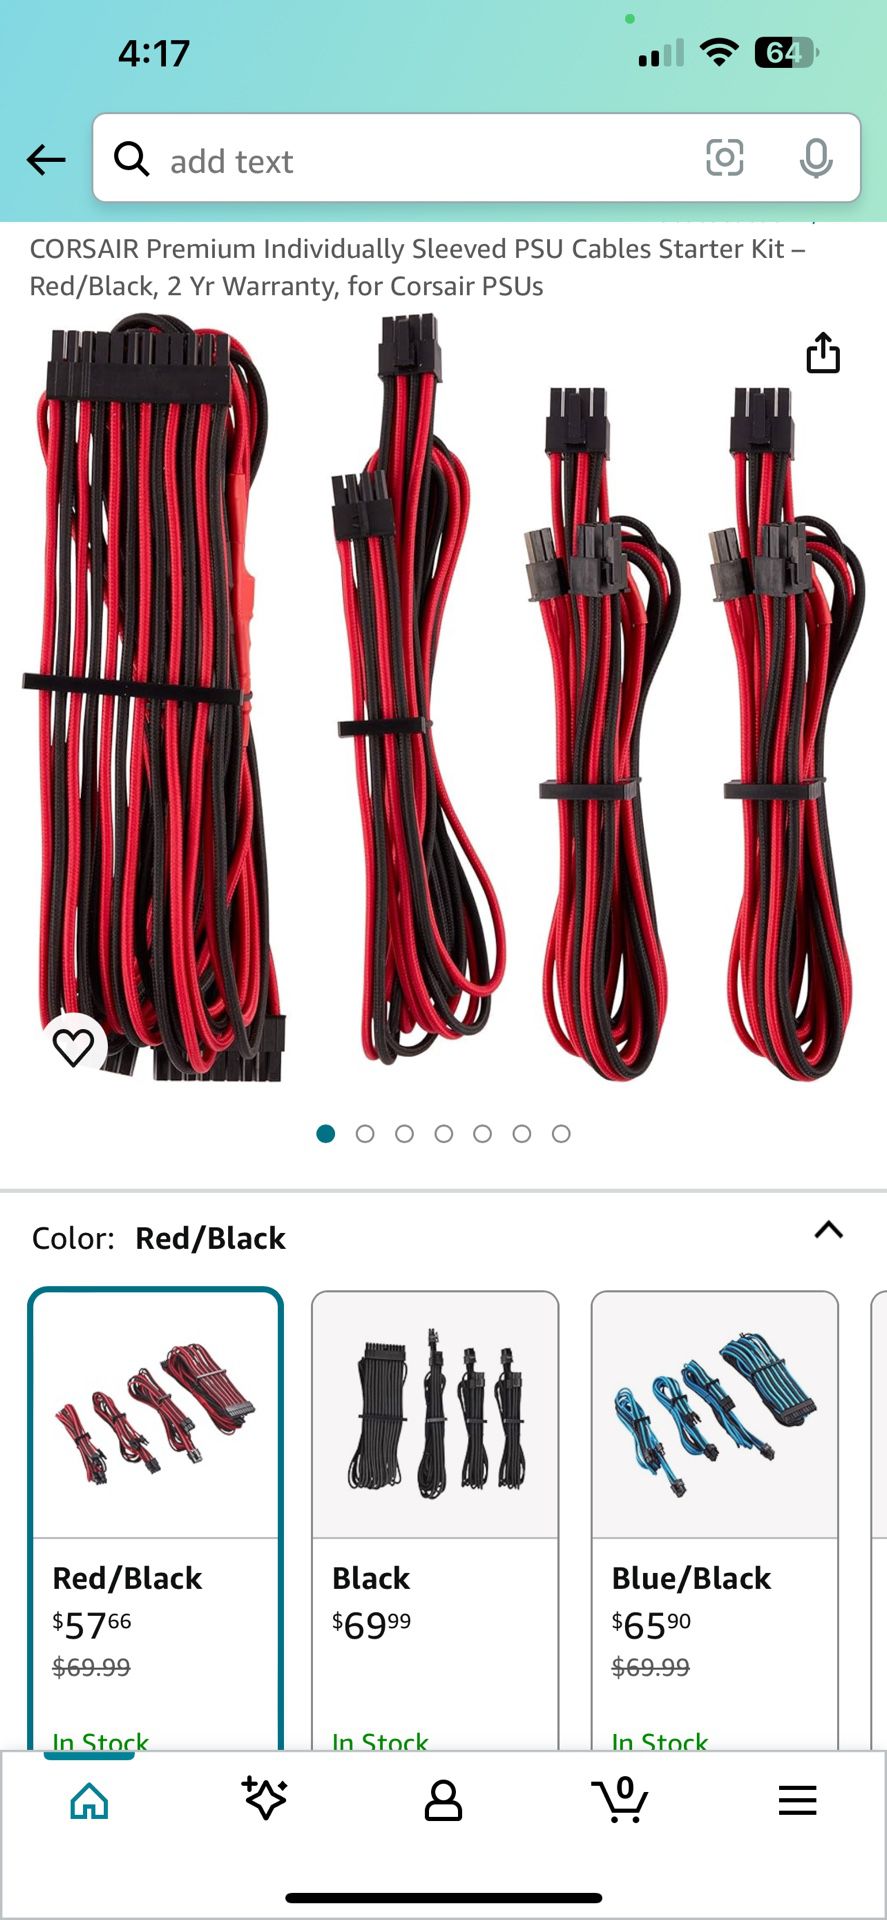 CORSAIR Premium Individually Sleeved PSU Cables Starter Kit – Red/Black